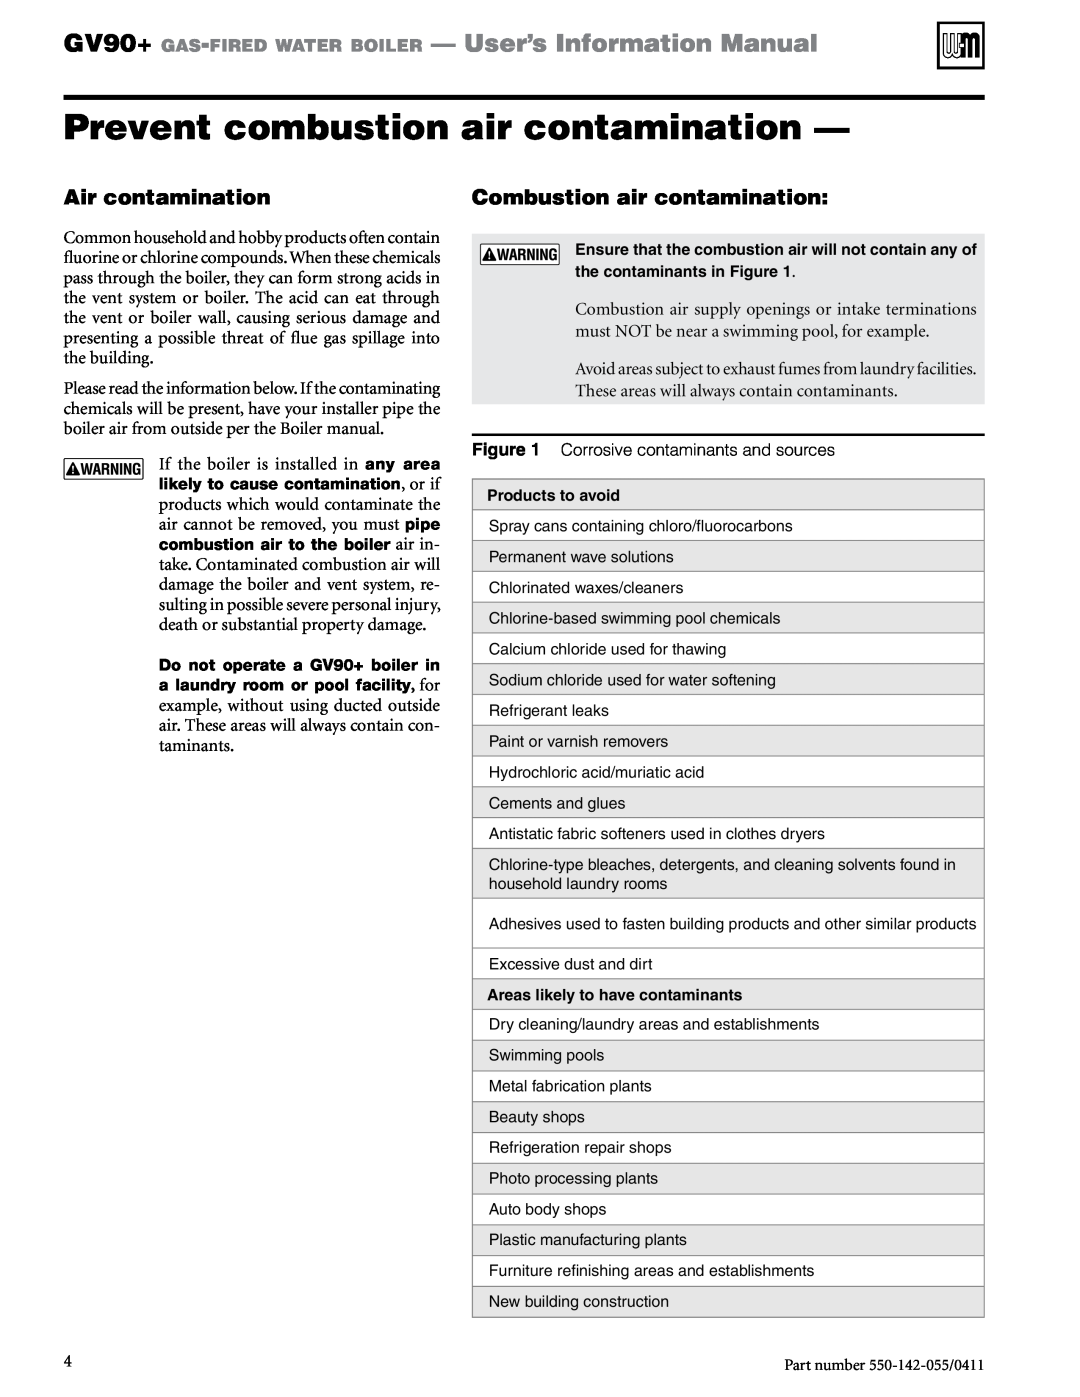 Weil-McLain GV90+ manual Prevent combustion air contamination, Air contamination, Combustion air contamination 